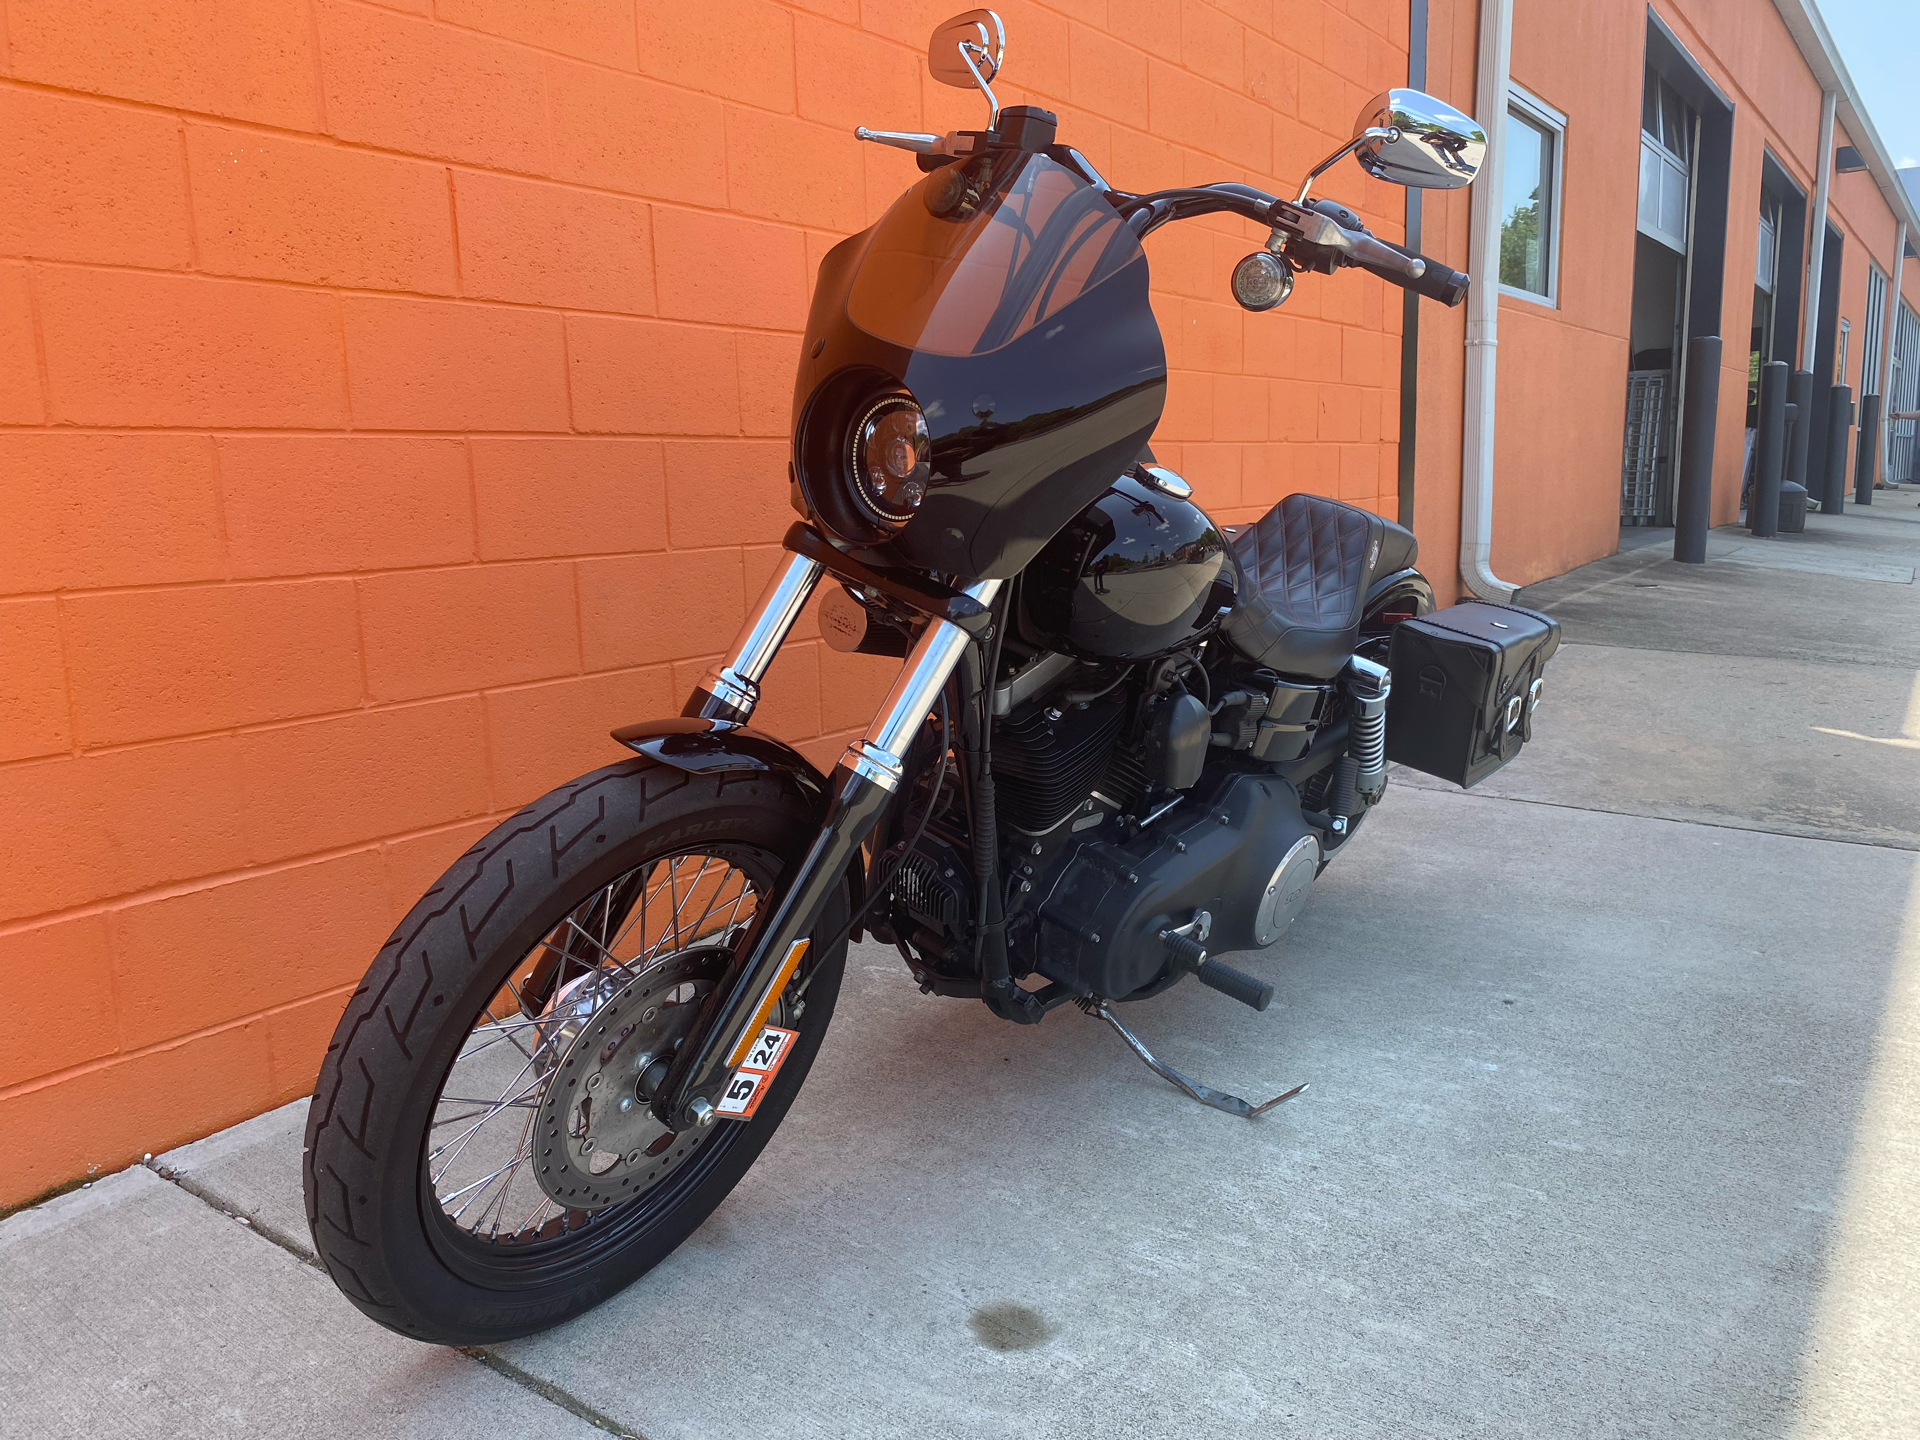 2017 Harley-Davidson DYNA STREET BOB in Fredericksburg, Virginia - Photo 4